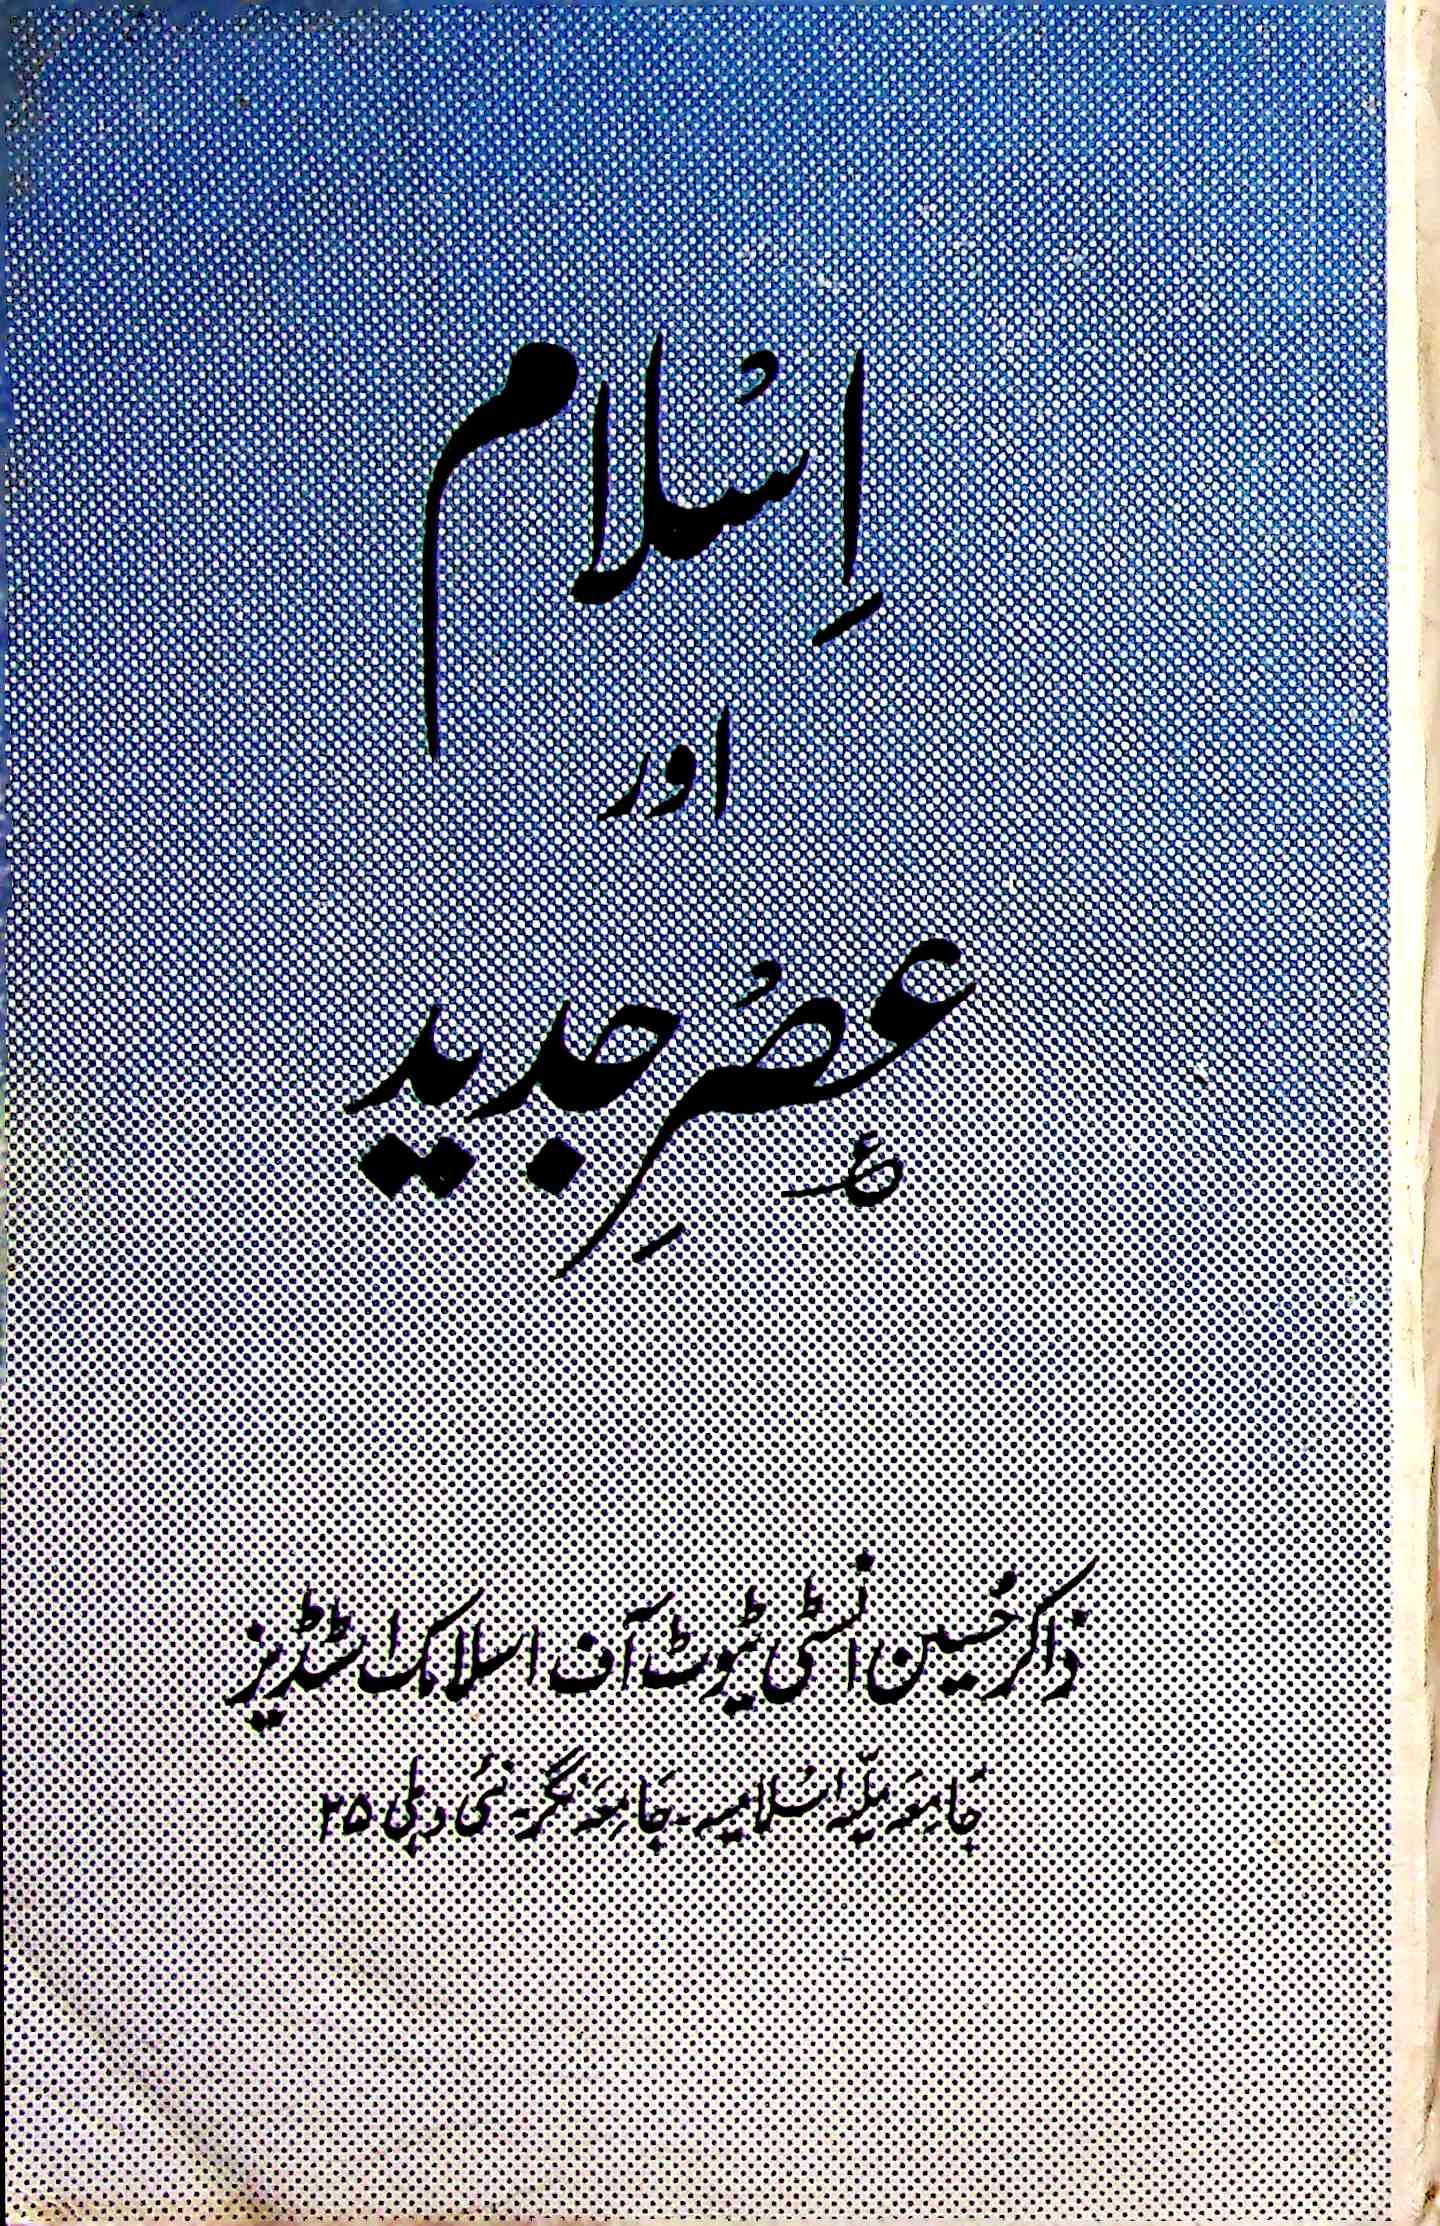 Islam Aur Asar E Jadeed Jild 29 Shumara 3 July 1997-Shumara Number-003